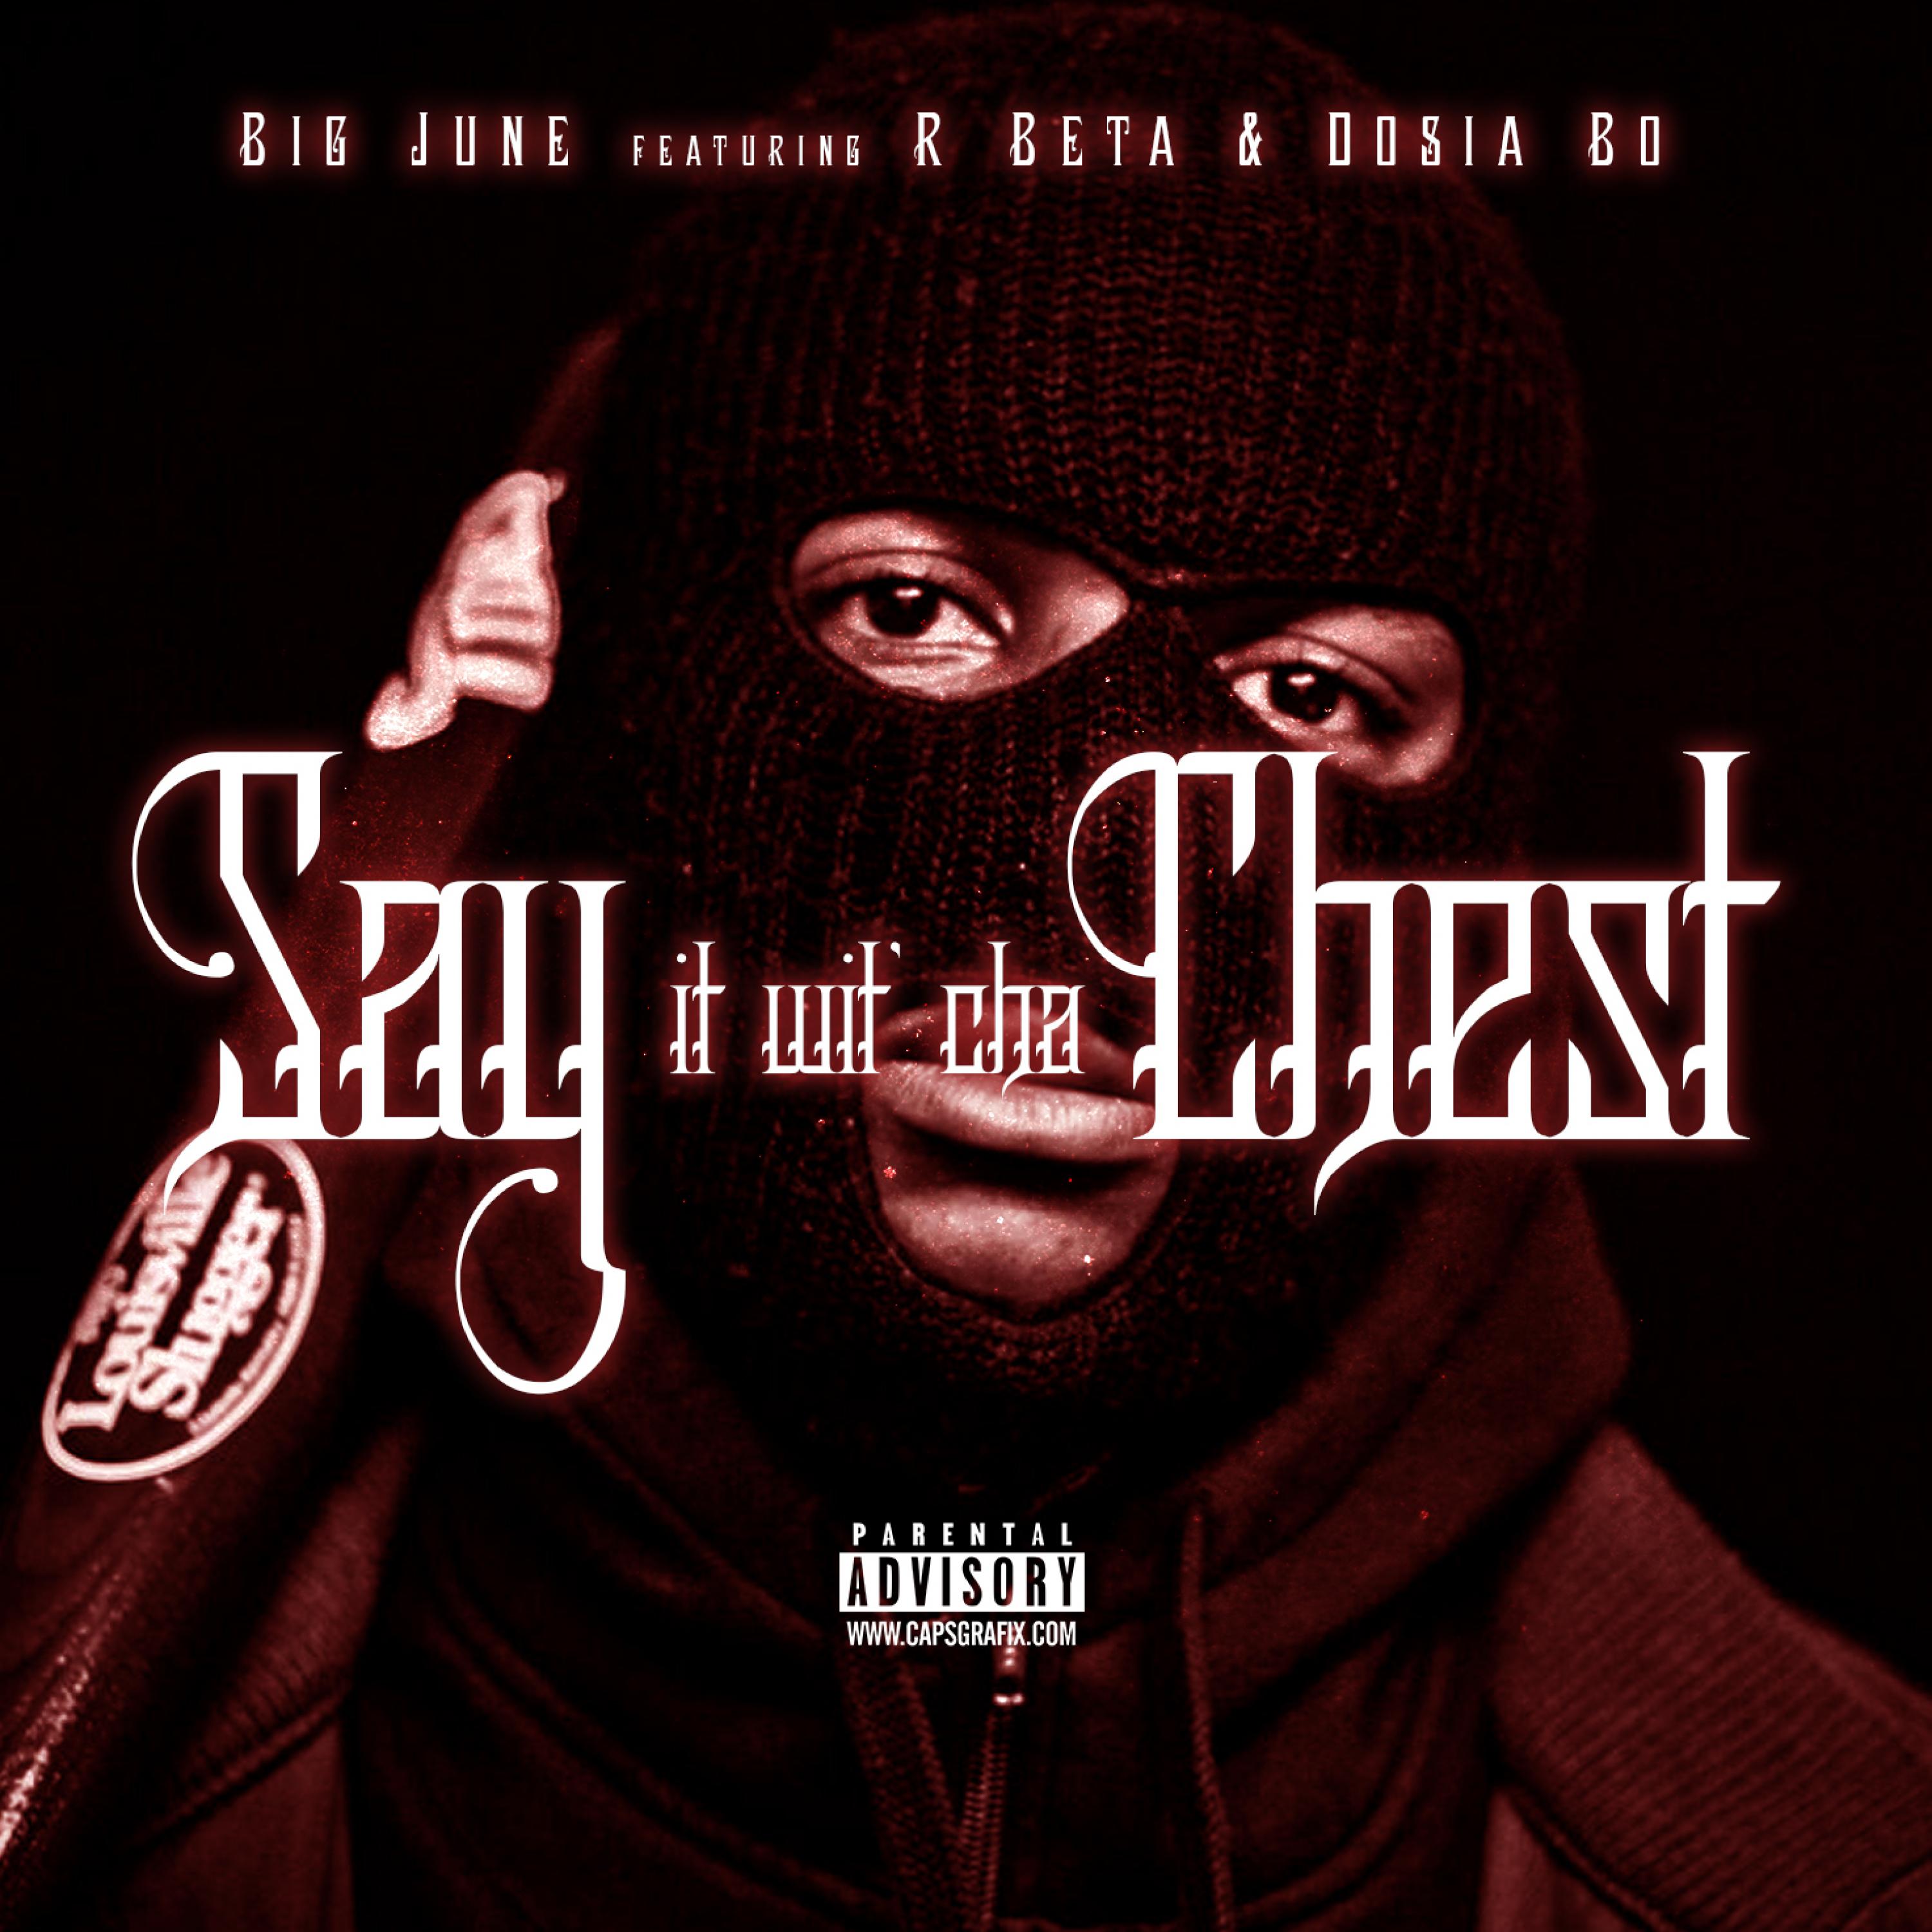 Say It wit Cha Chest (feat. R Beta & Dosia Bo) - Single